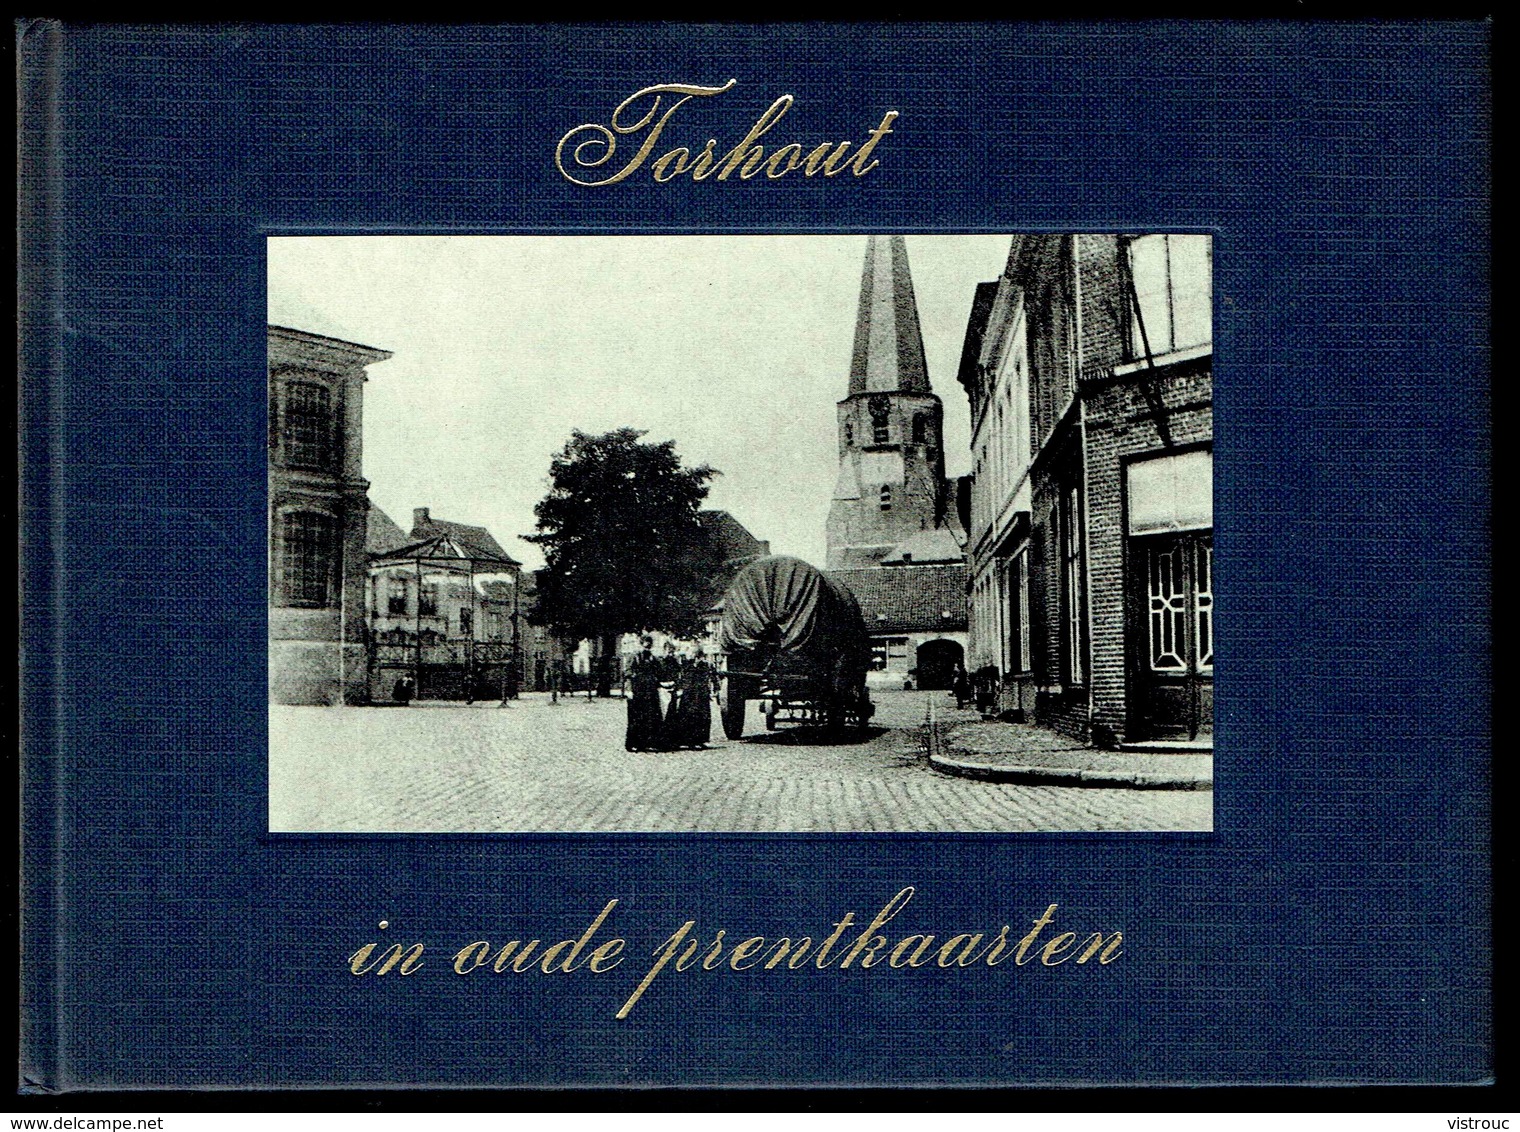 TORHOUT In Oude Prentkaarten - Edition Bibliothèque Européenne, Zaltbommel - 1972 - 3 Scans. - Books & Catalogs